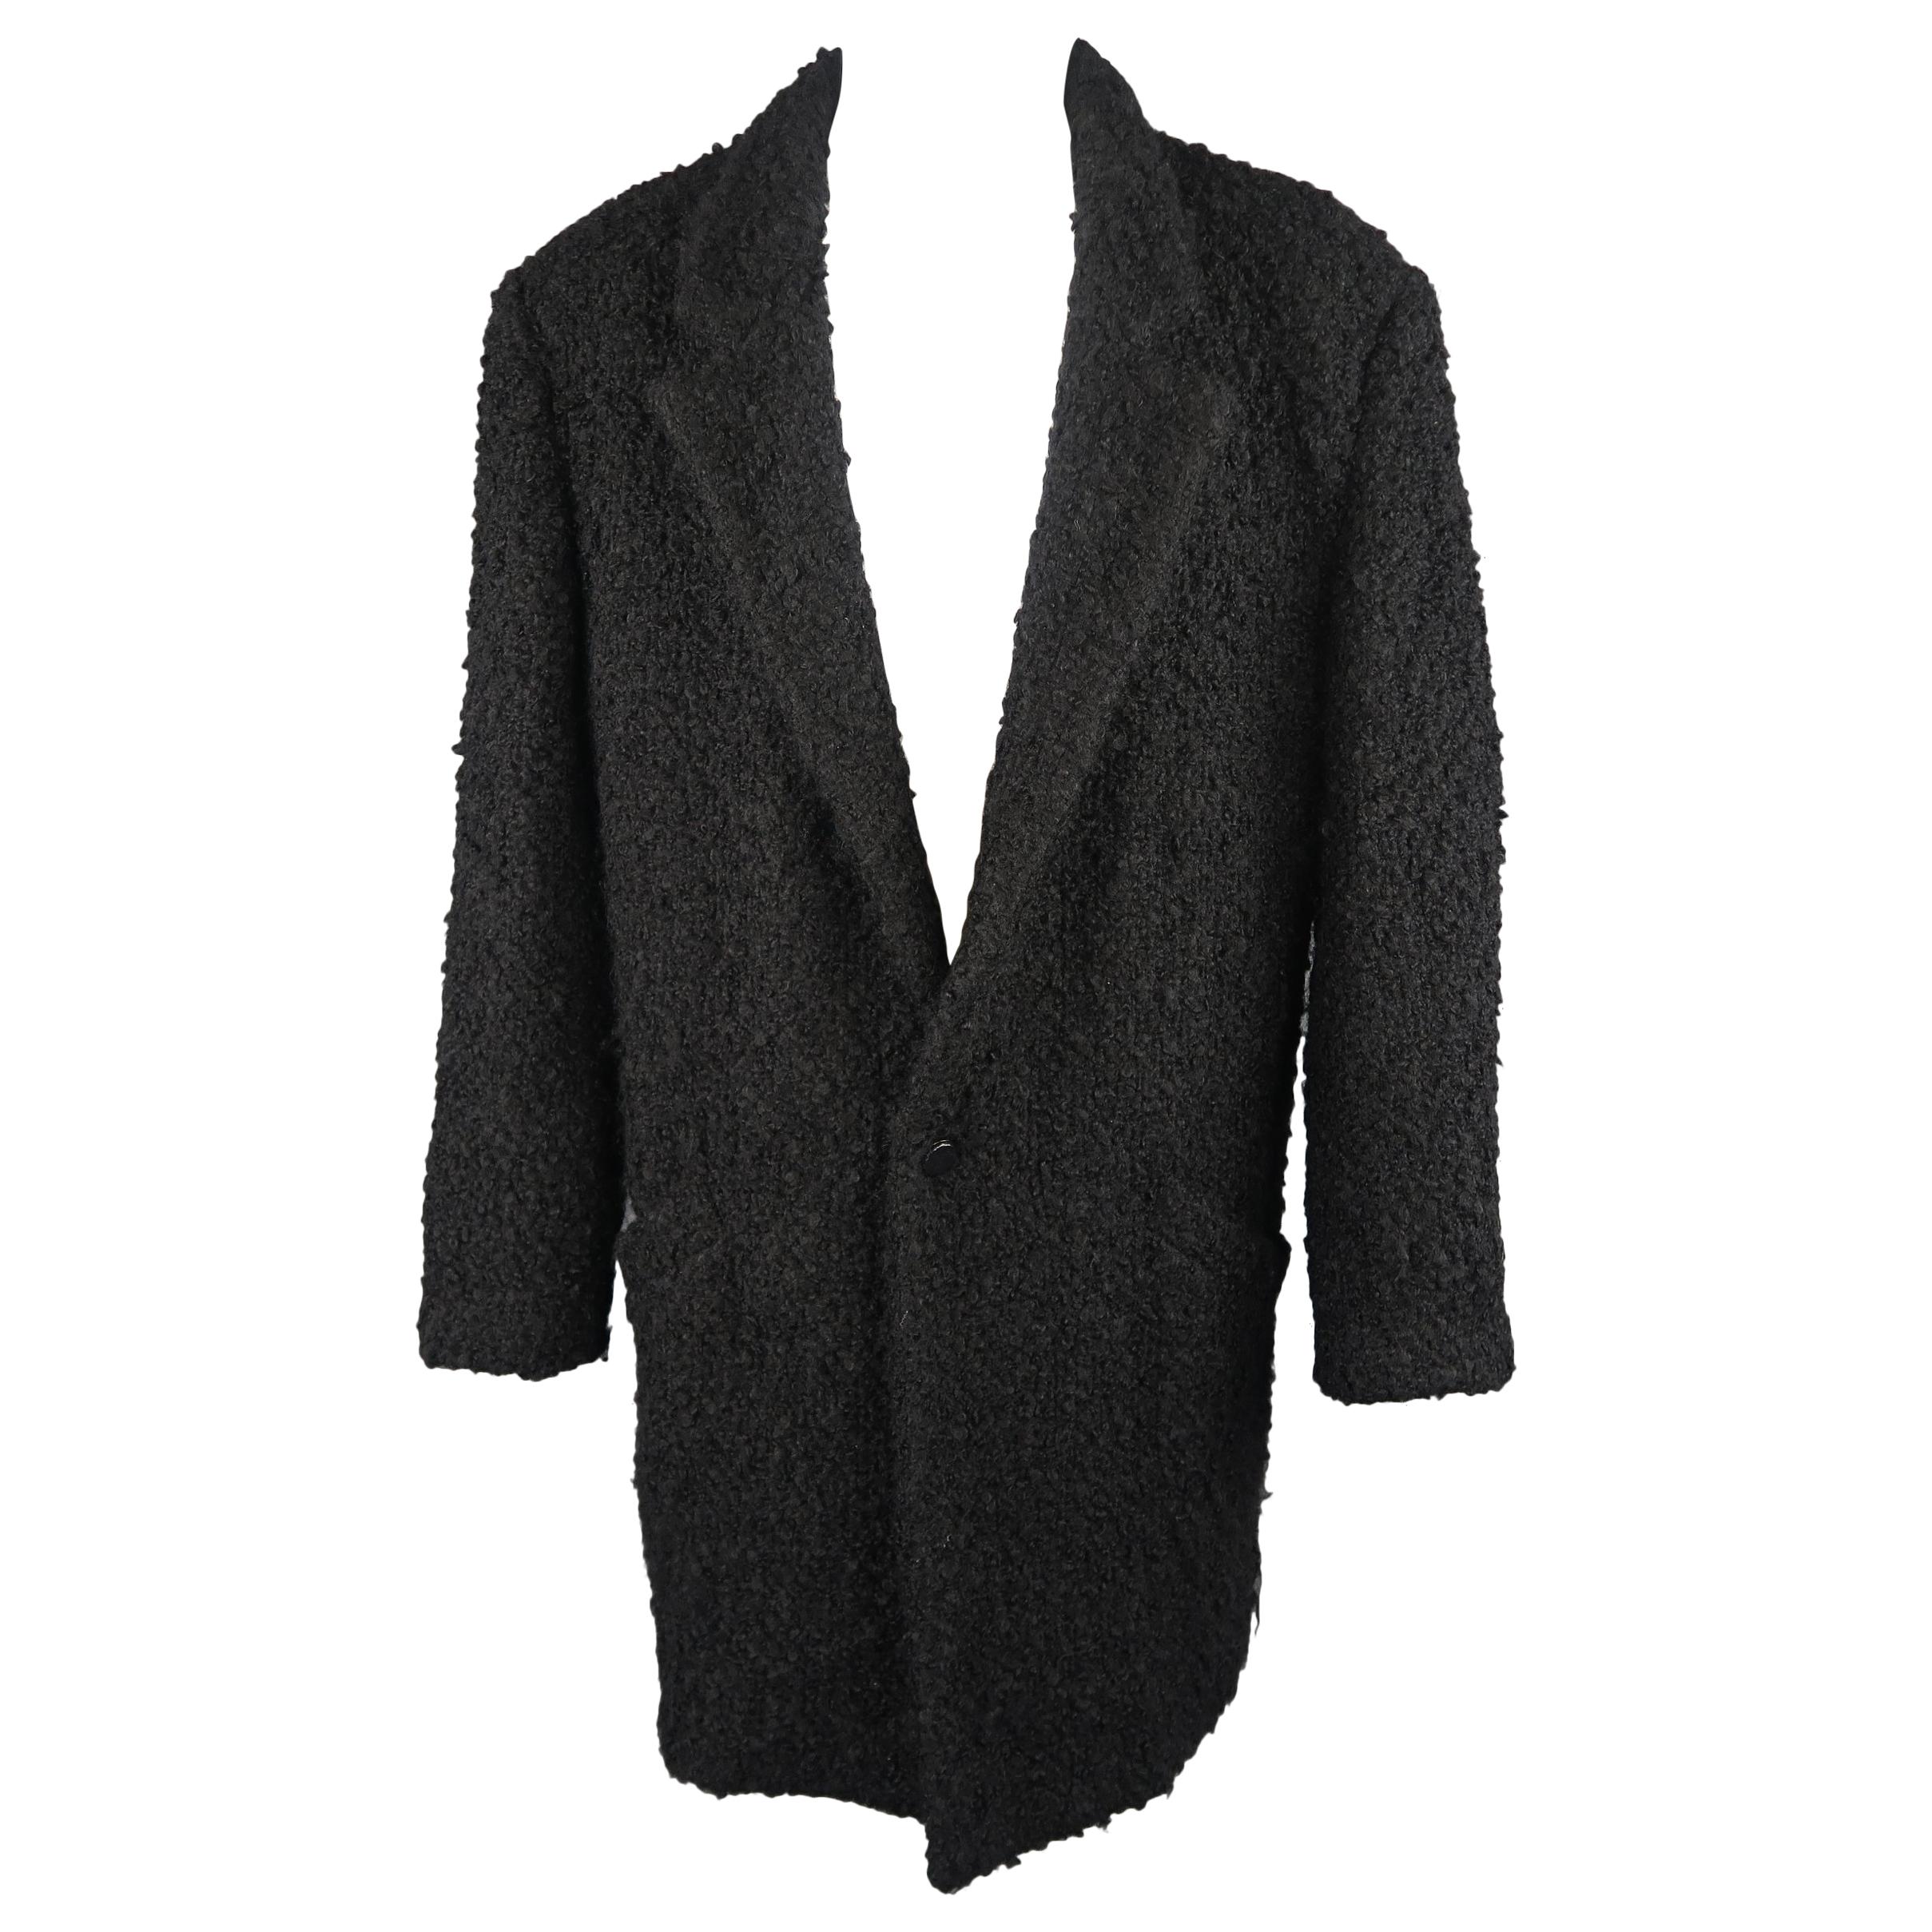 Gianni Versace Black Textured Wool / Mohair Single Button Overcoat